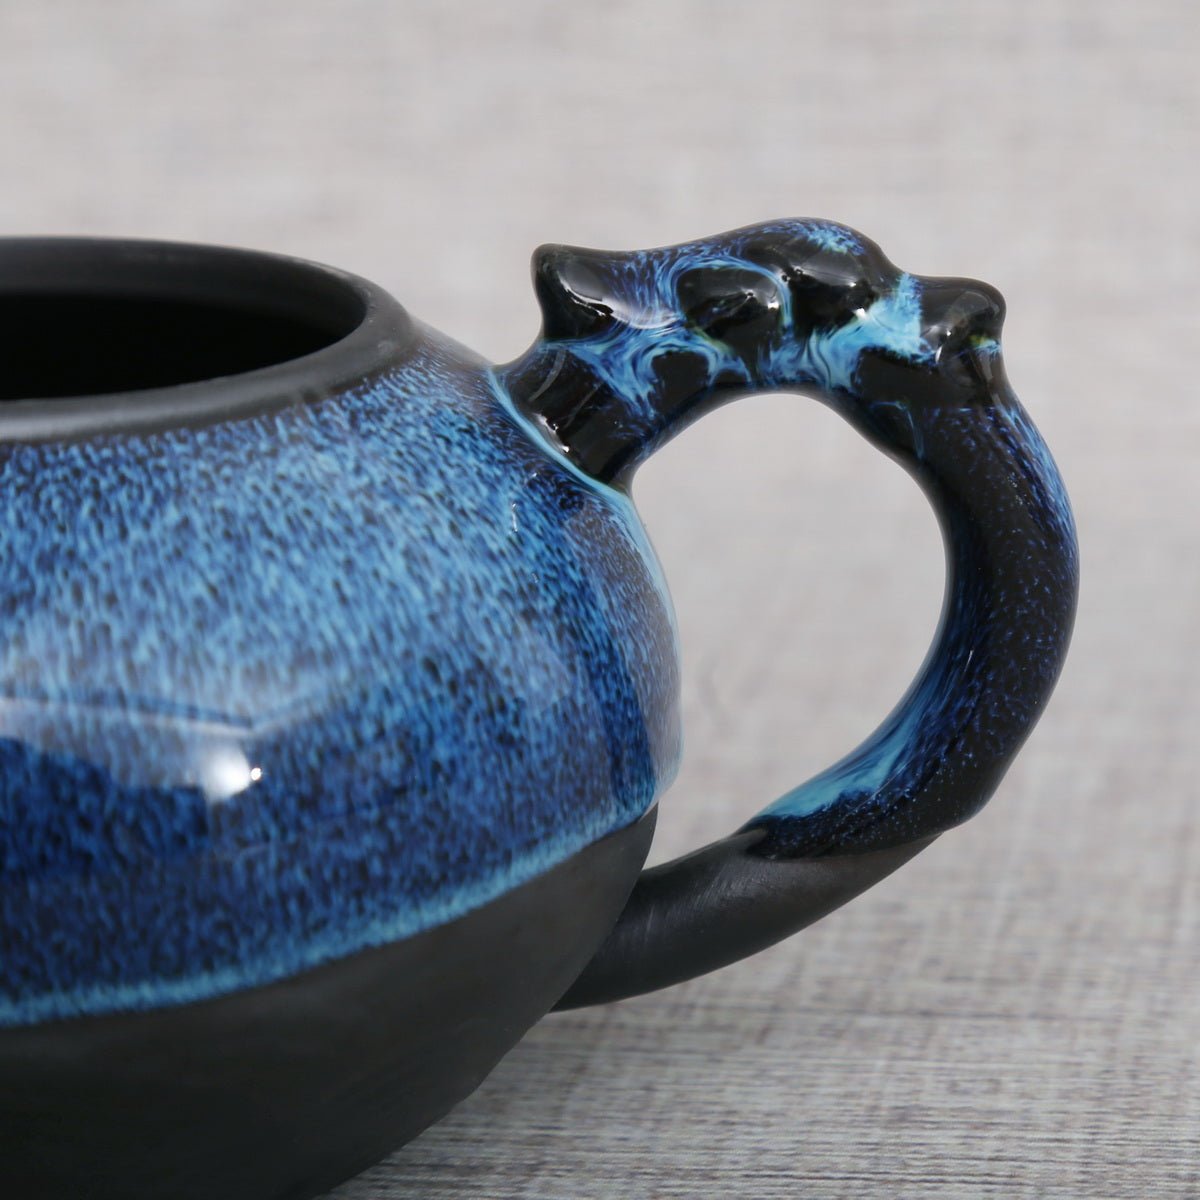 Travel tea set - 1 teapot 4 teacups (Dragon, Blue) - Taishan Tea Club